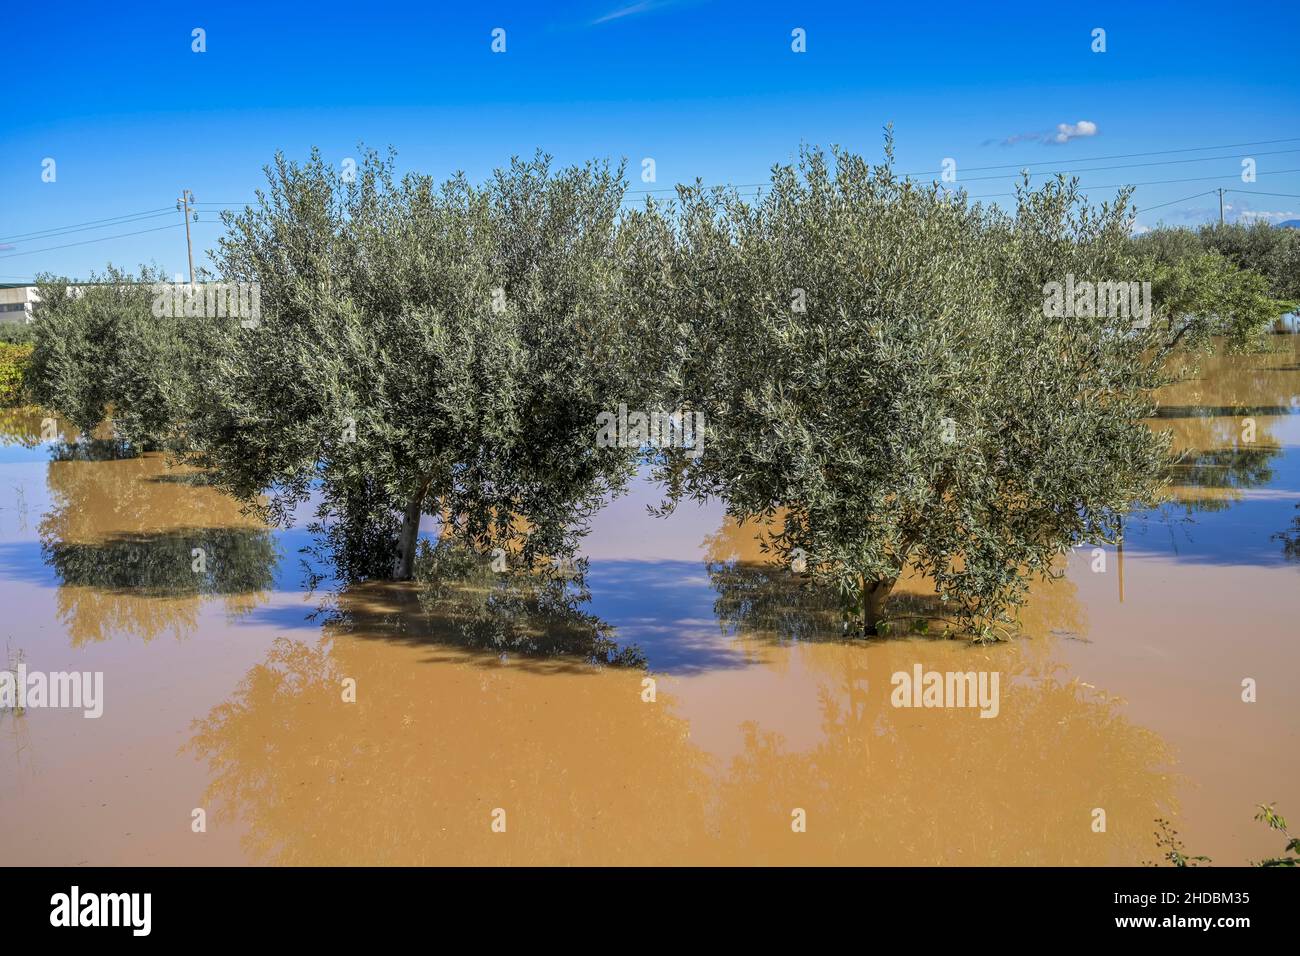 Überschwemmung wegen Starker Regenfälle, Olivenhain nahe Castelvetrano, Sizilien, Italien Foto Stock